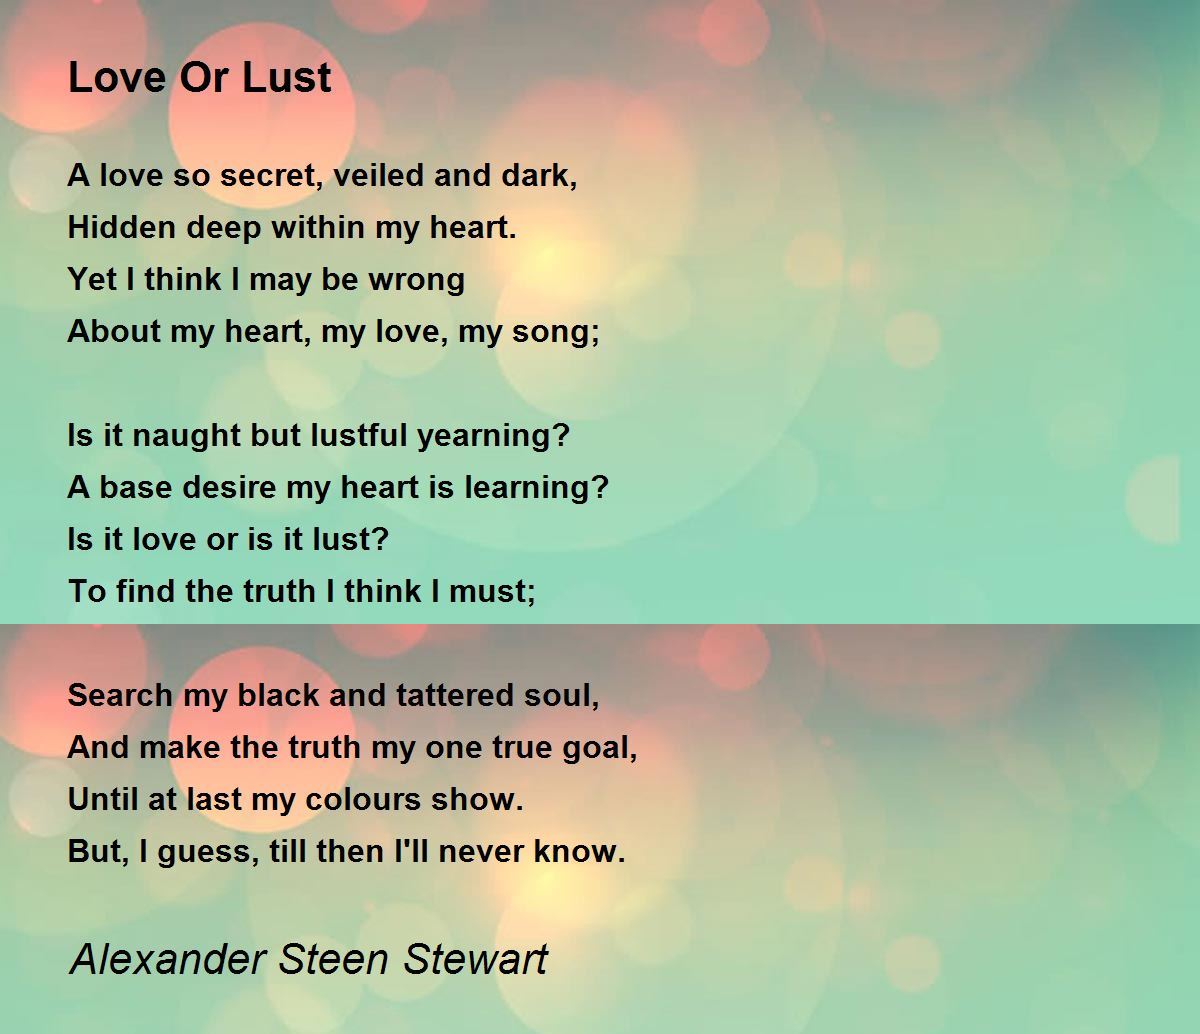 Love or lust is this Lust vs.